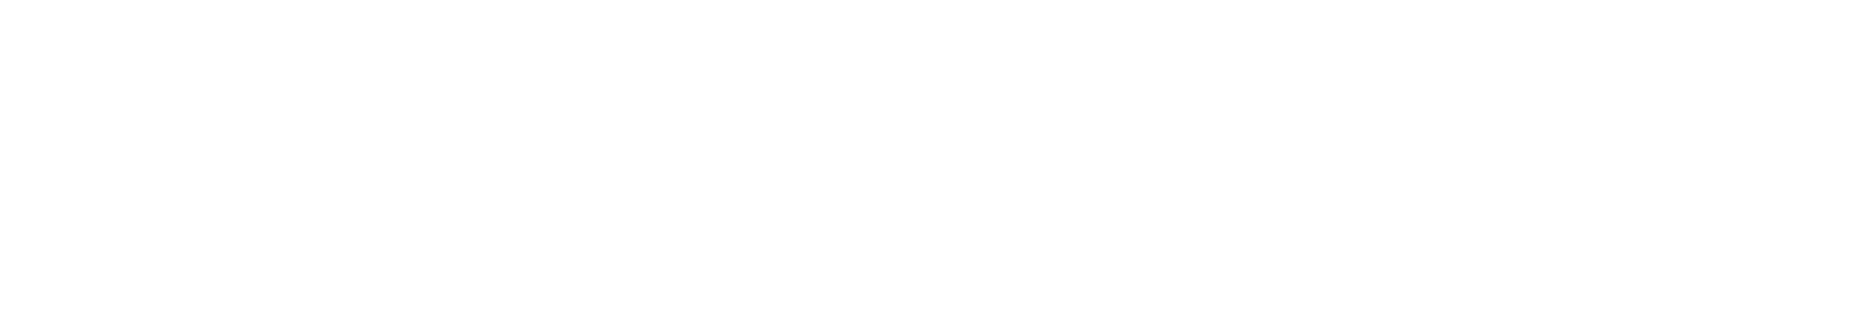 AAU MEDICAL-LEGAL CONSULTING